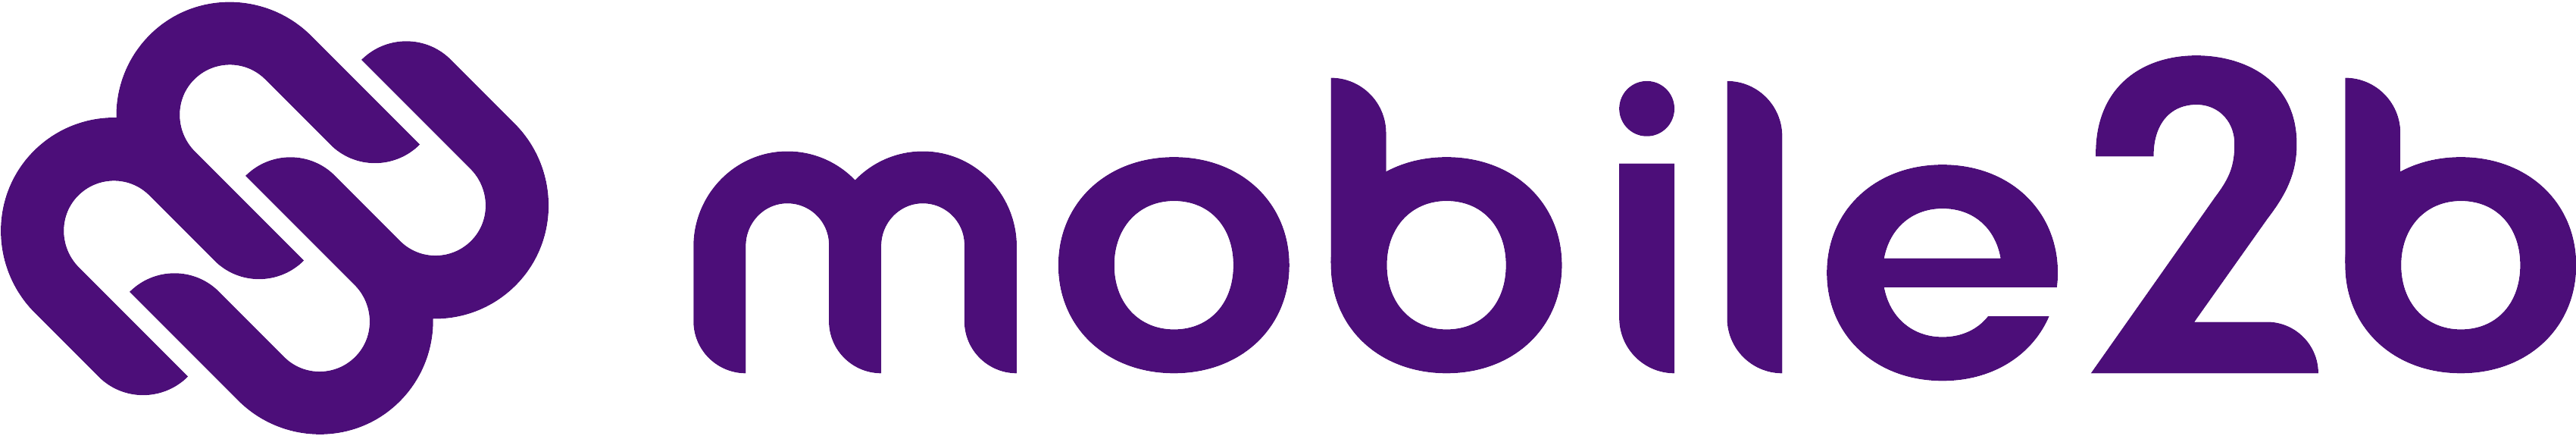 Mobile2b logo